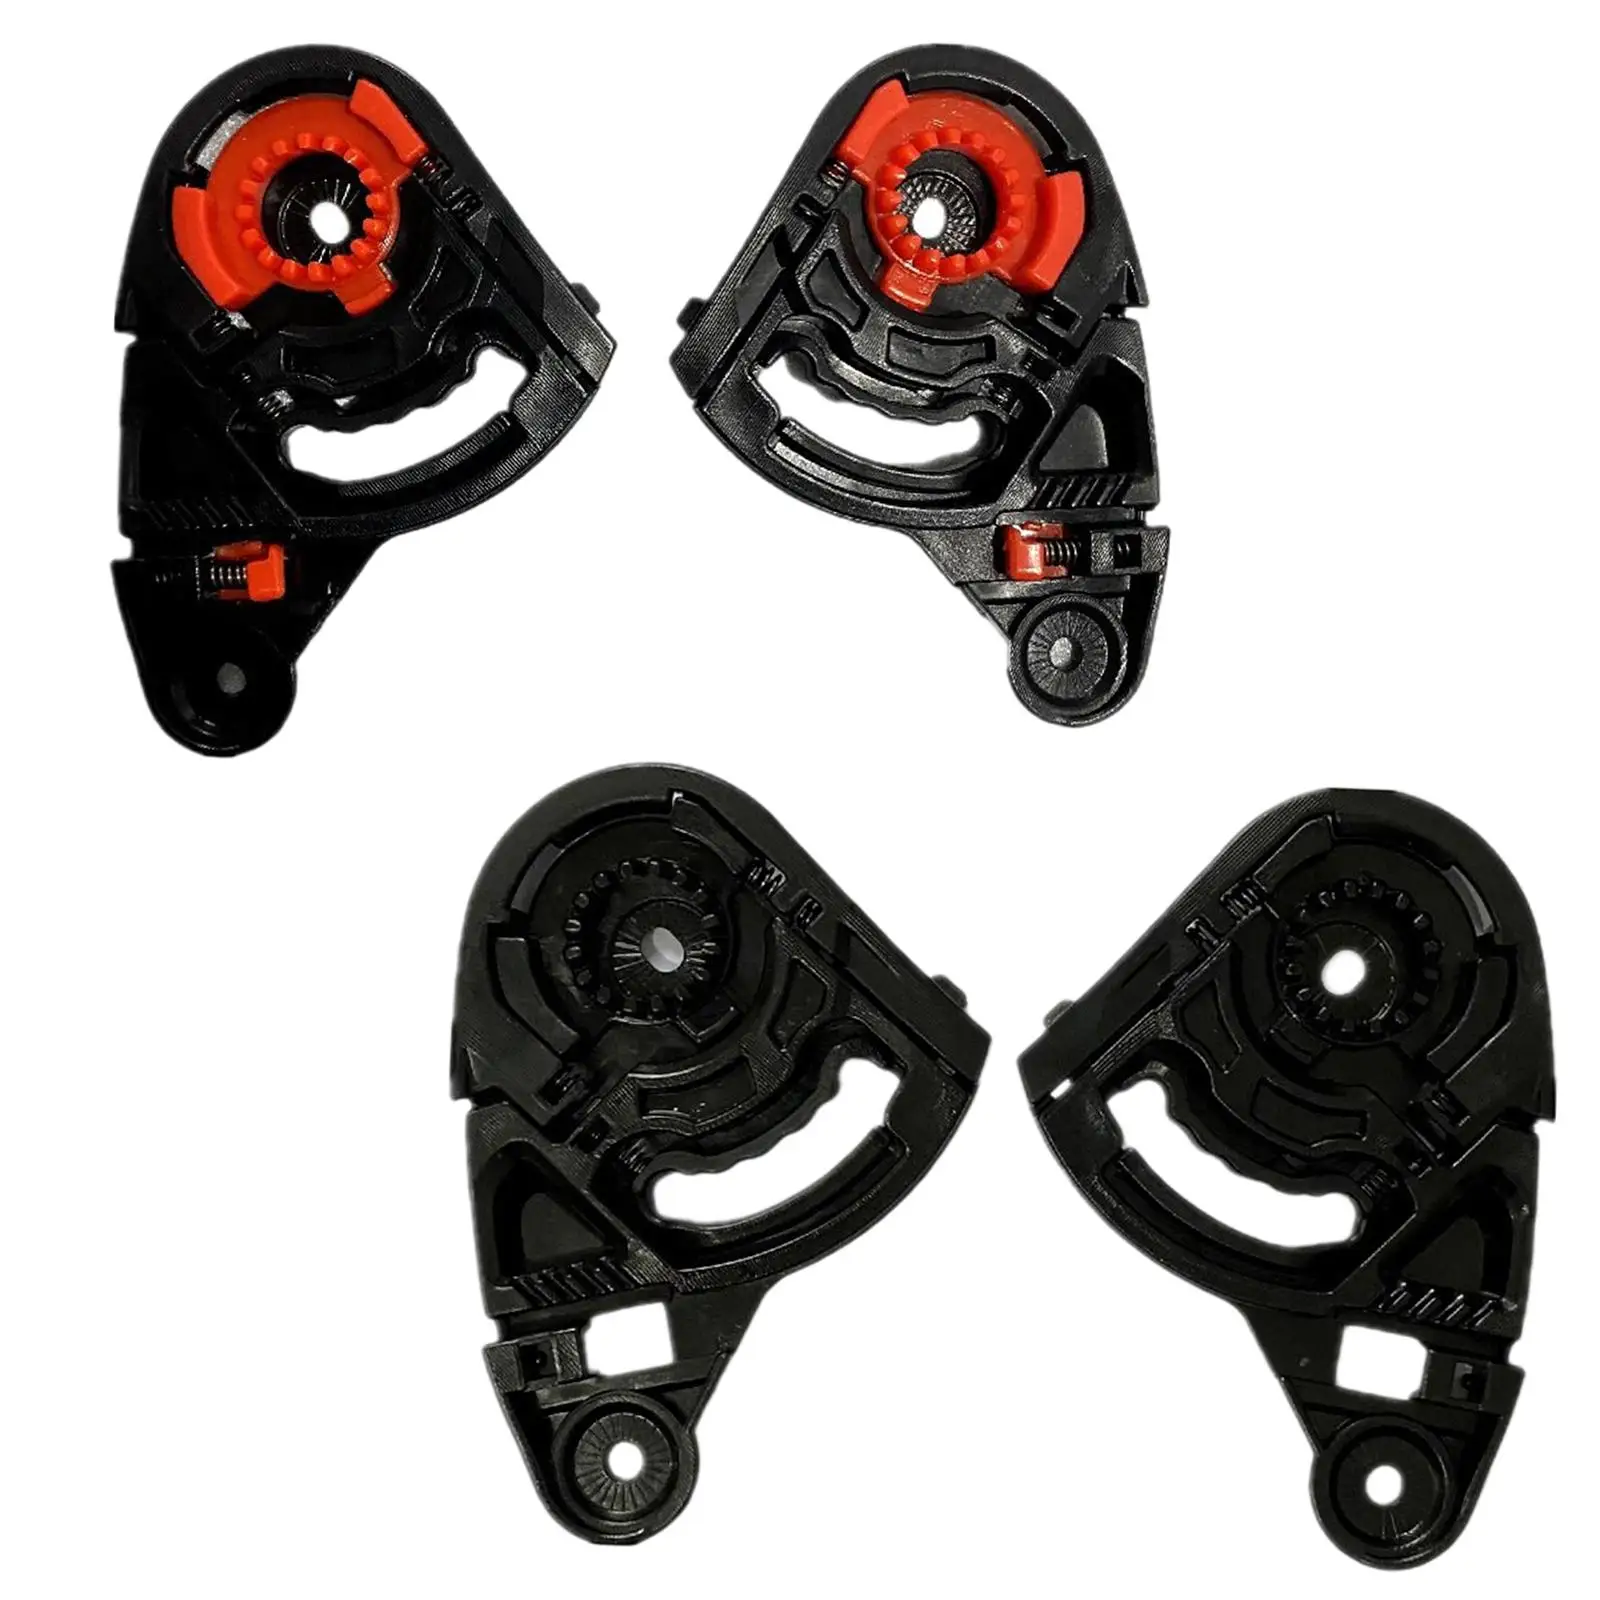 Helmet Gear Plate/Ratchet Set Shield Durable Lens Base Holder Kit for MT Blade2 Revenge2 Rapide Bike Racing